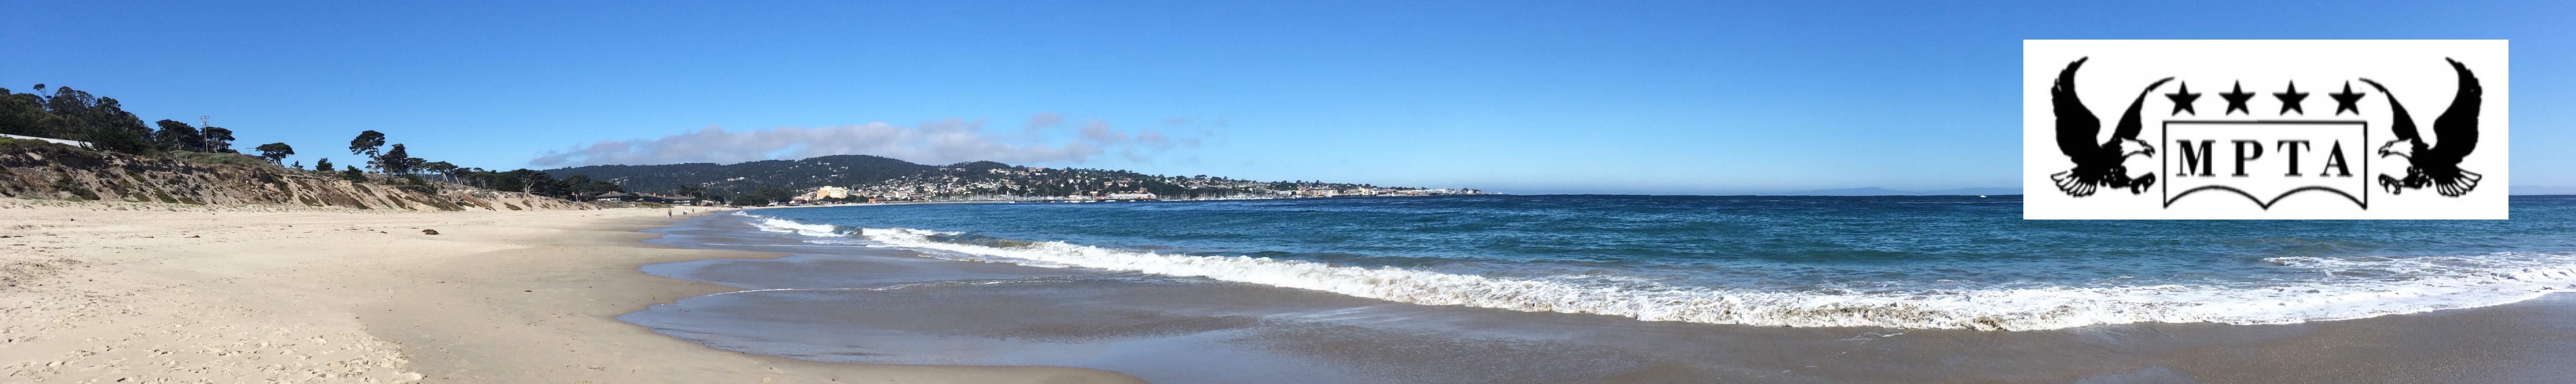 Monterey Peninsula Taxpayers Association: Expert Oversight on Behalf of Citizens